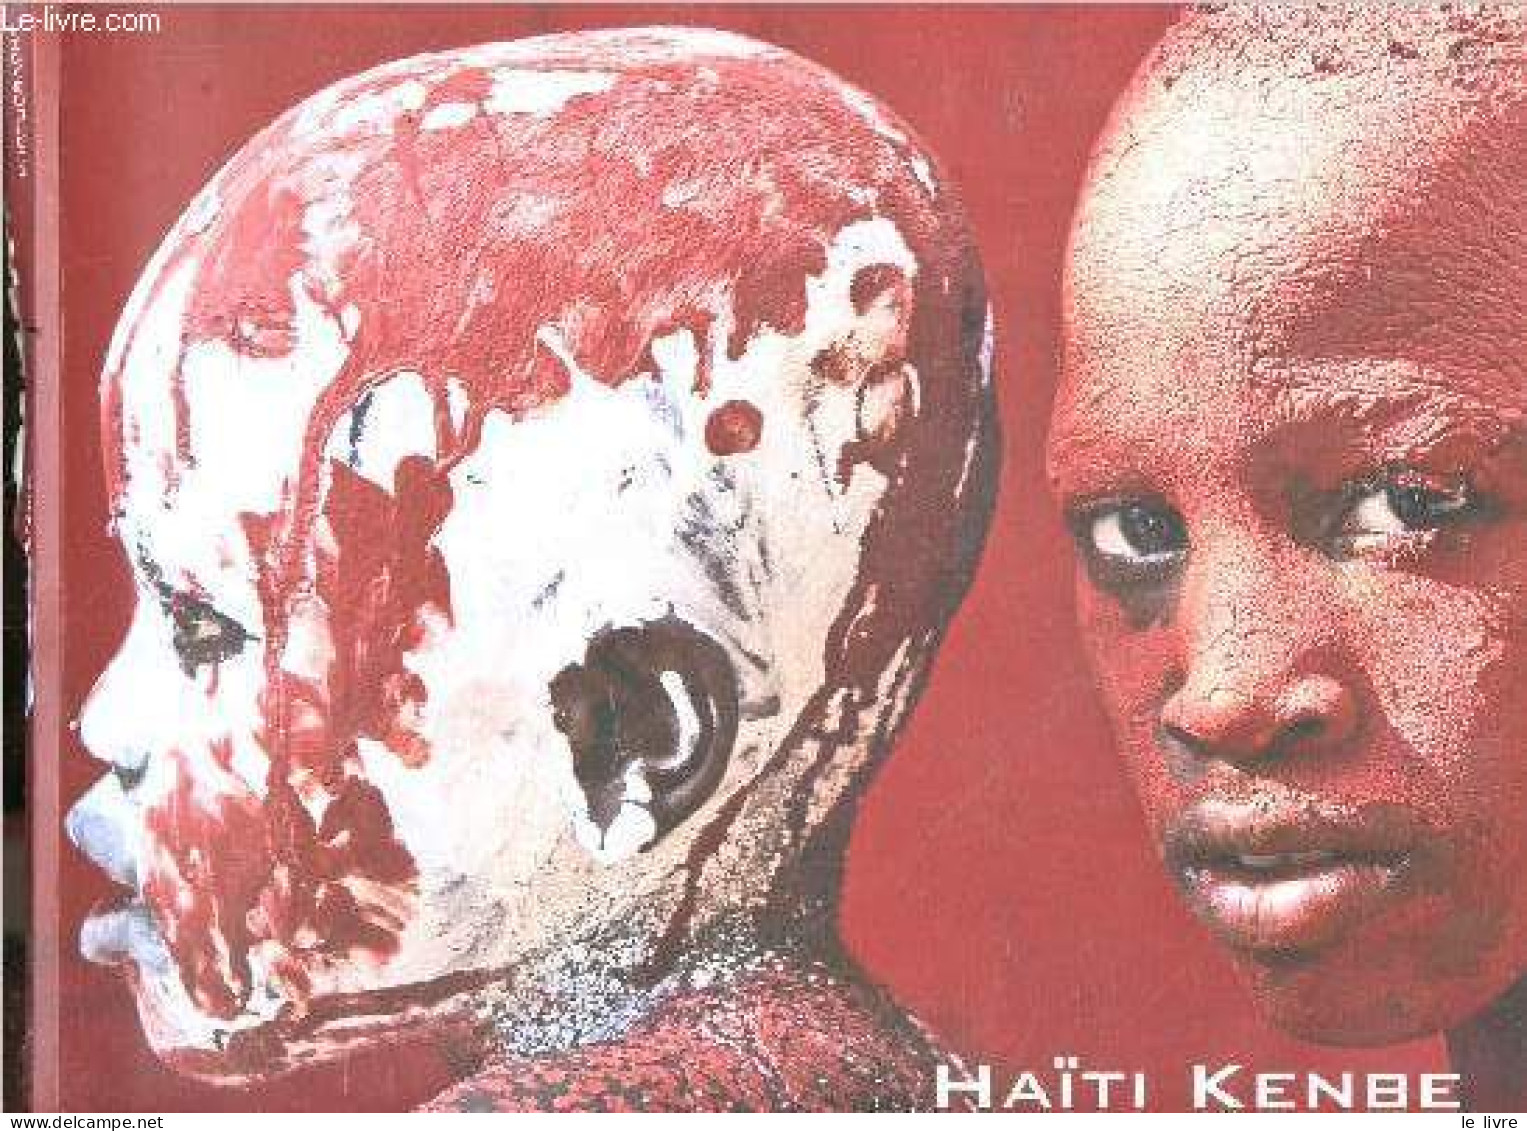 Haiti Kenbe - Ayiti, Kenbe Pa Lage ! - Benjamin - Jacques Martin Philippson - 2010 - Fotografia